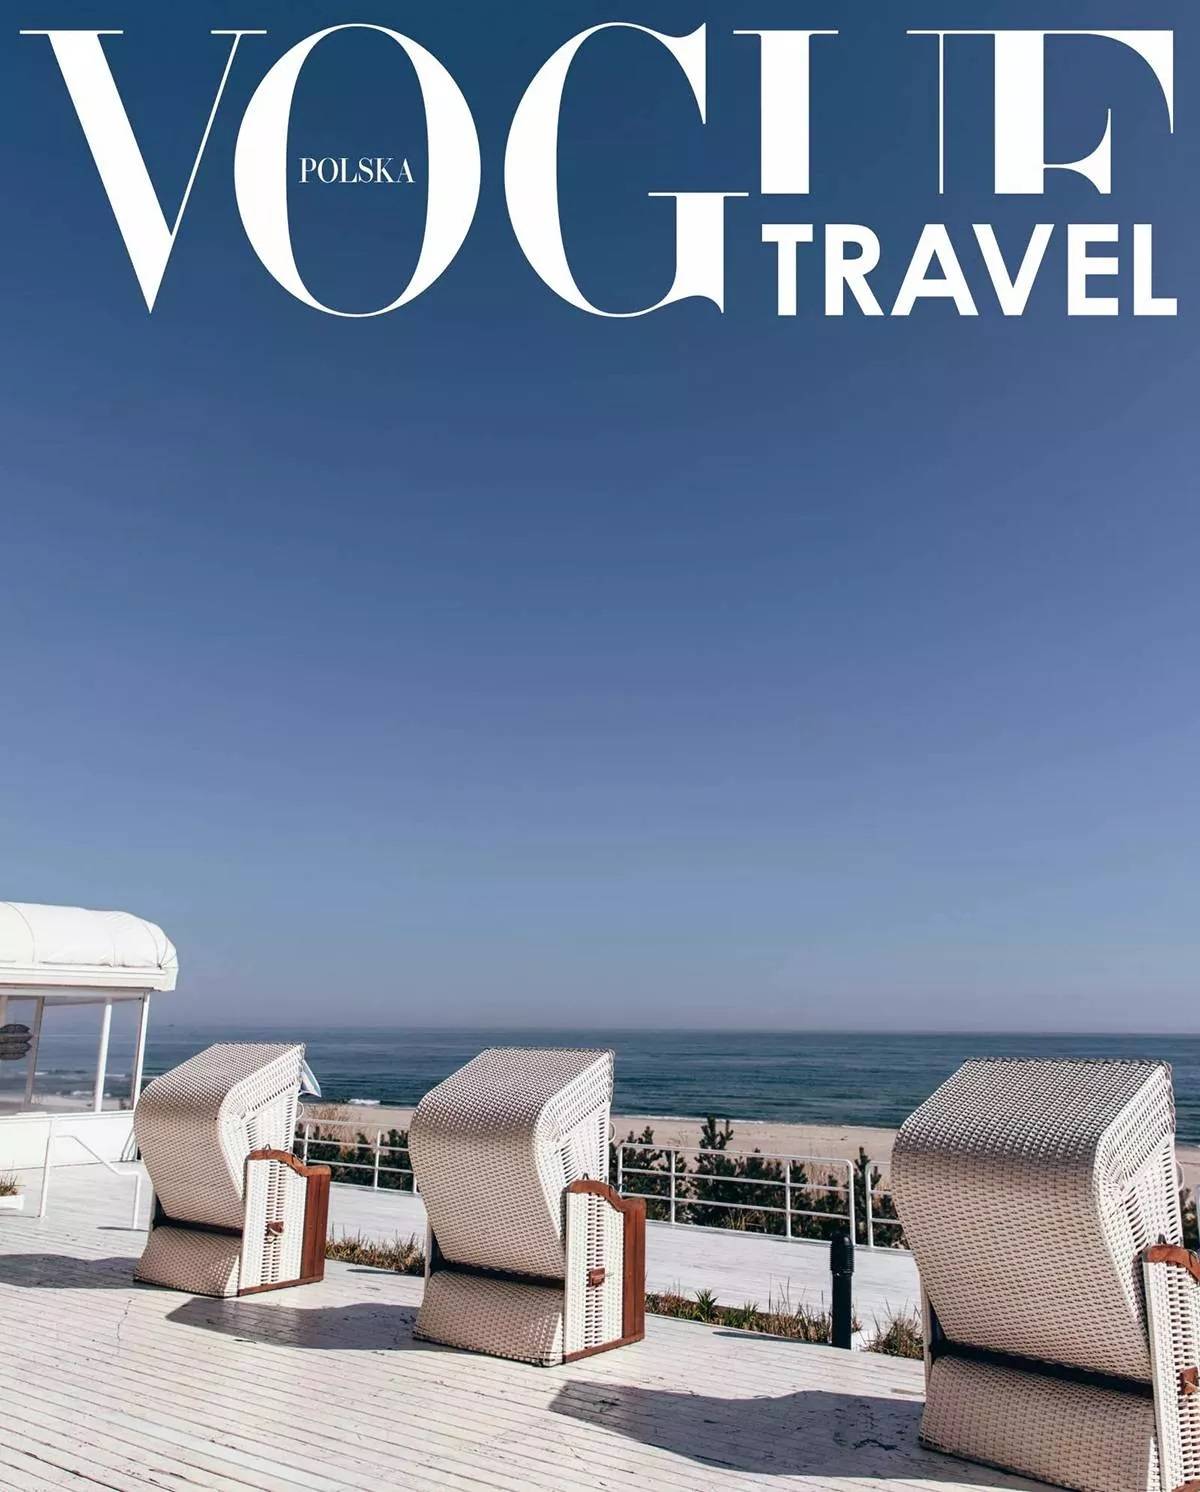 Vogue Polska Travel